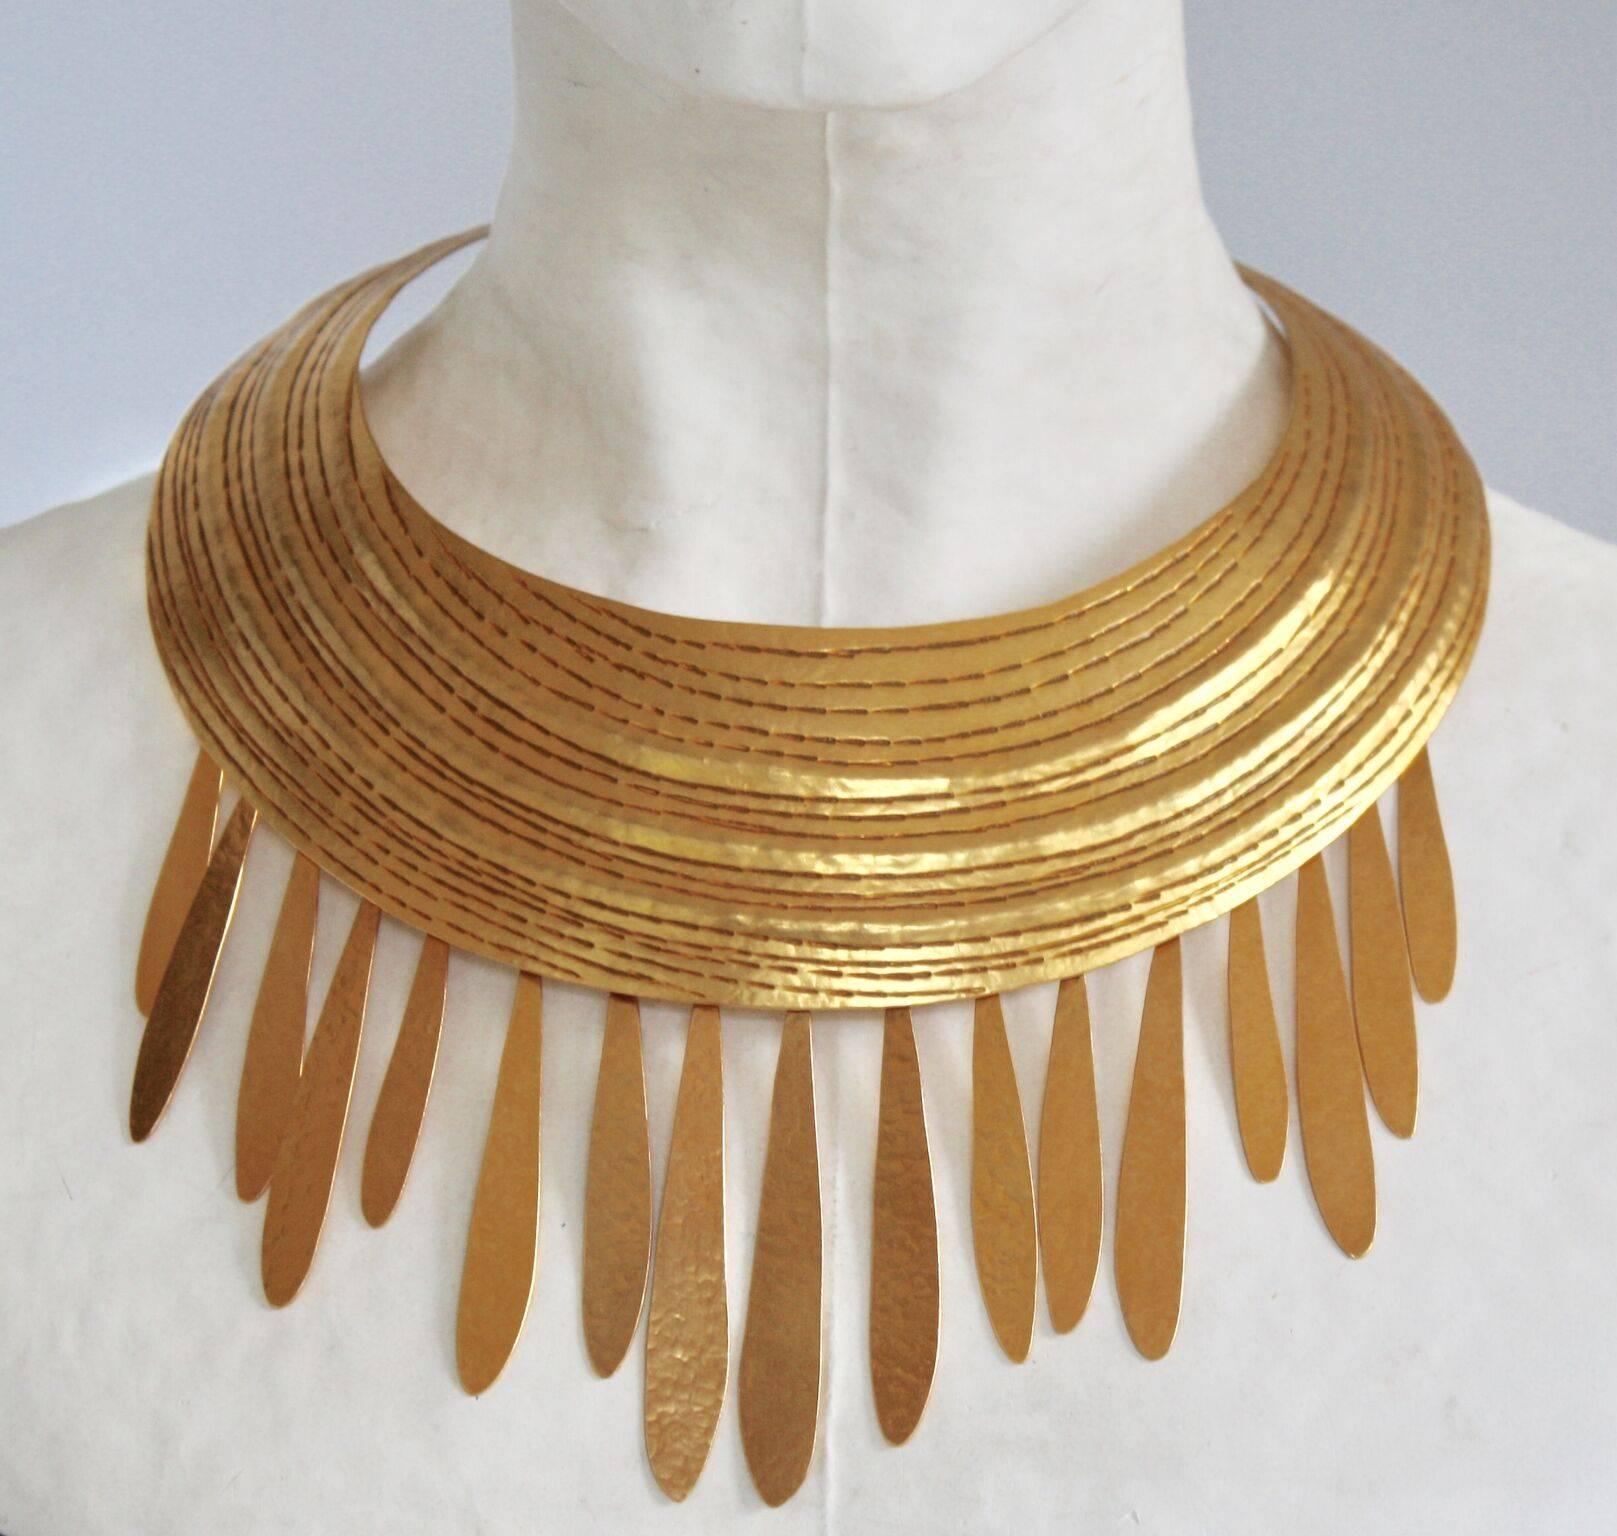 A gorgeous hand hammered gilded brass torque necklace from Herve van der Straeten with fringe detailing. 

Outside diameter - 7